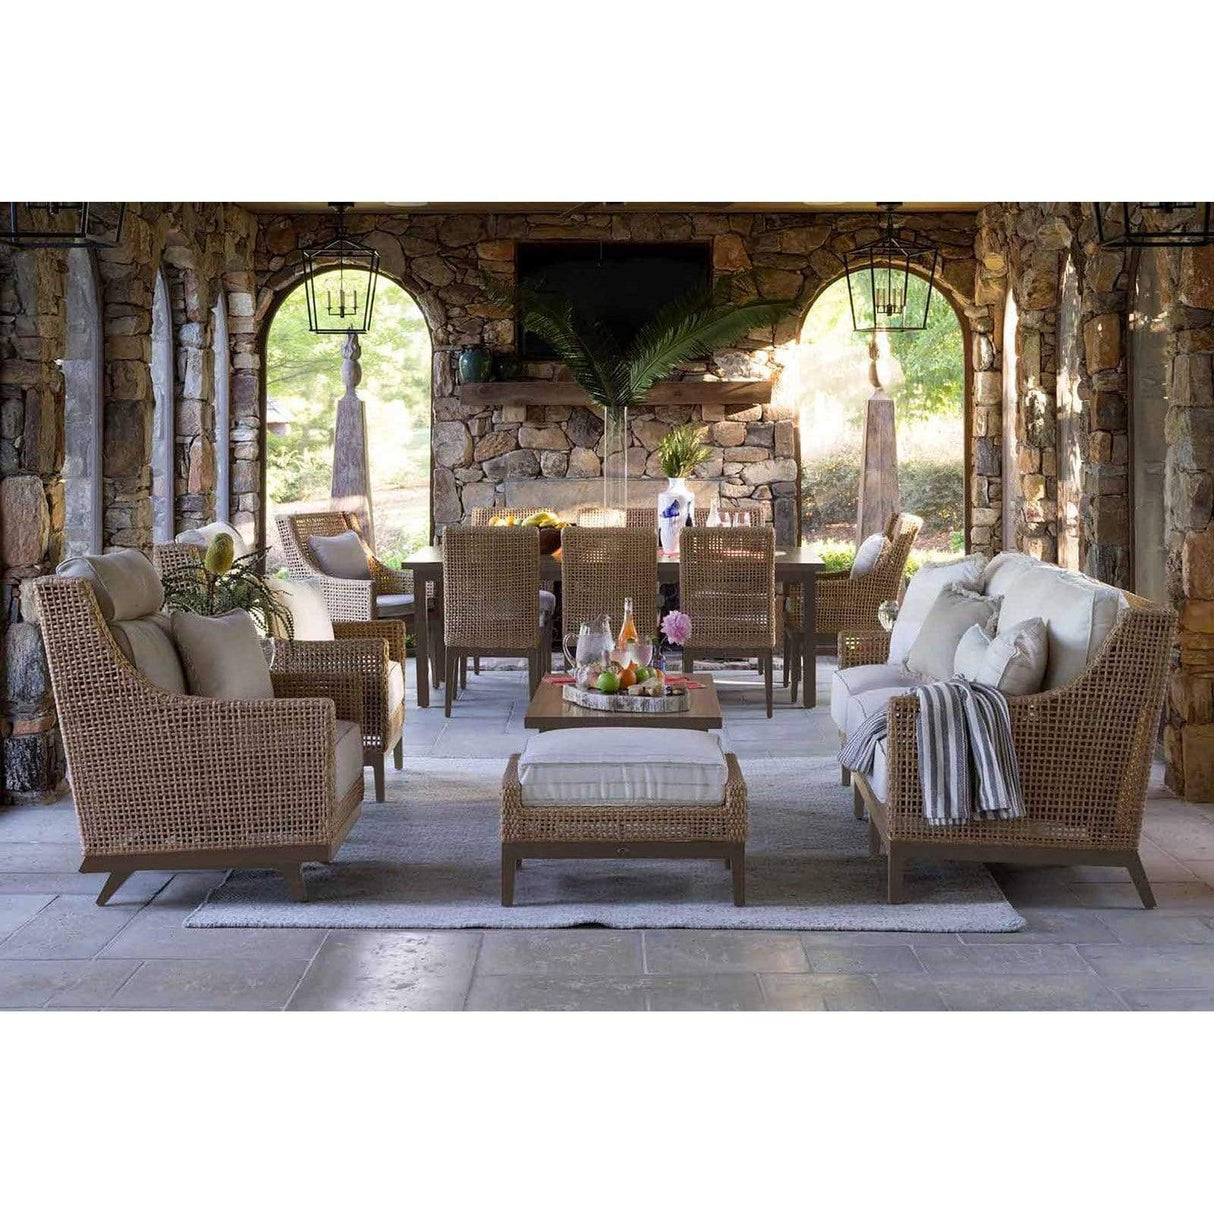 Summer Classics Peninsula Arm Chair Furniture summer-classics-423037+C5253884W3884